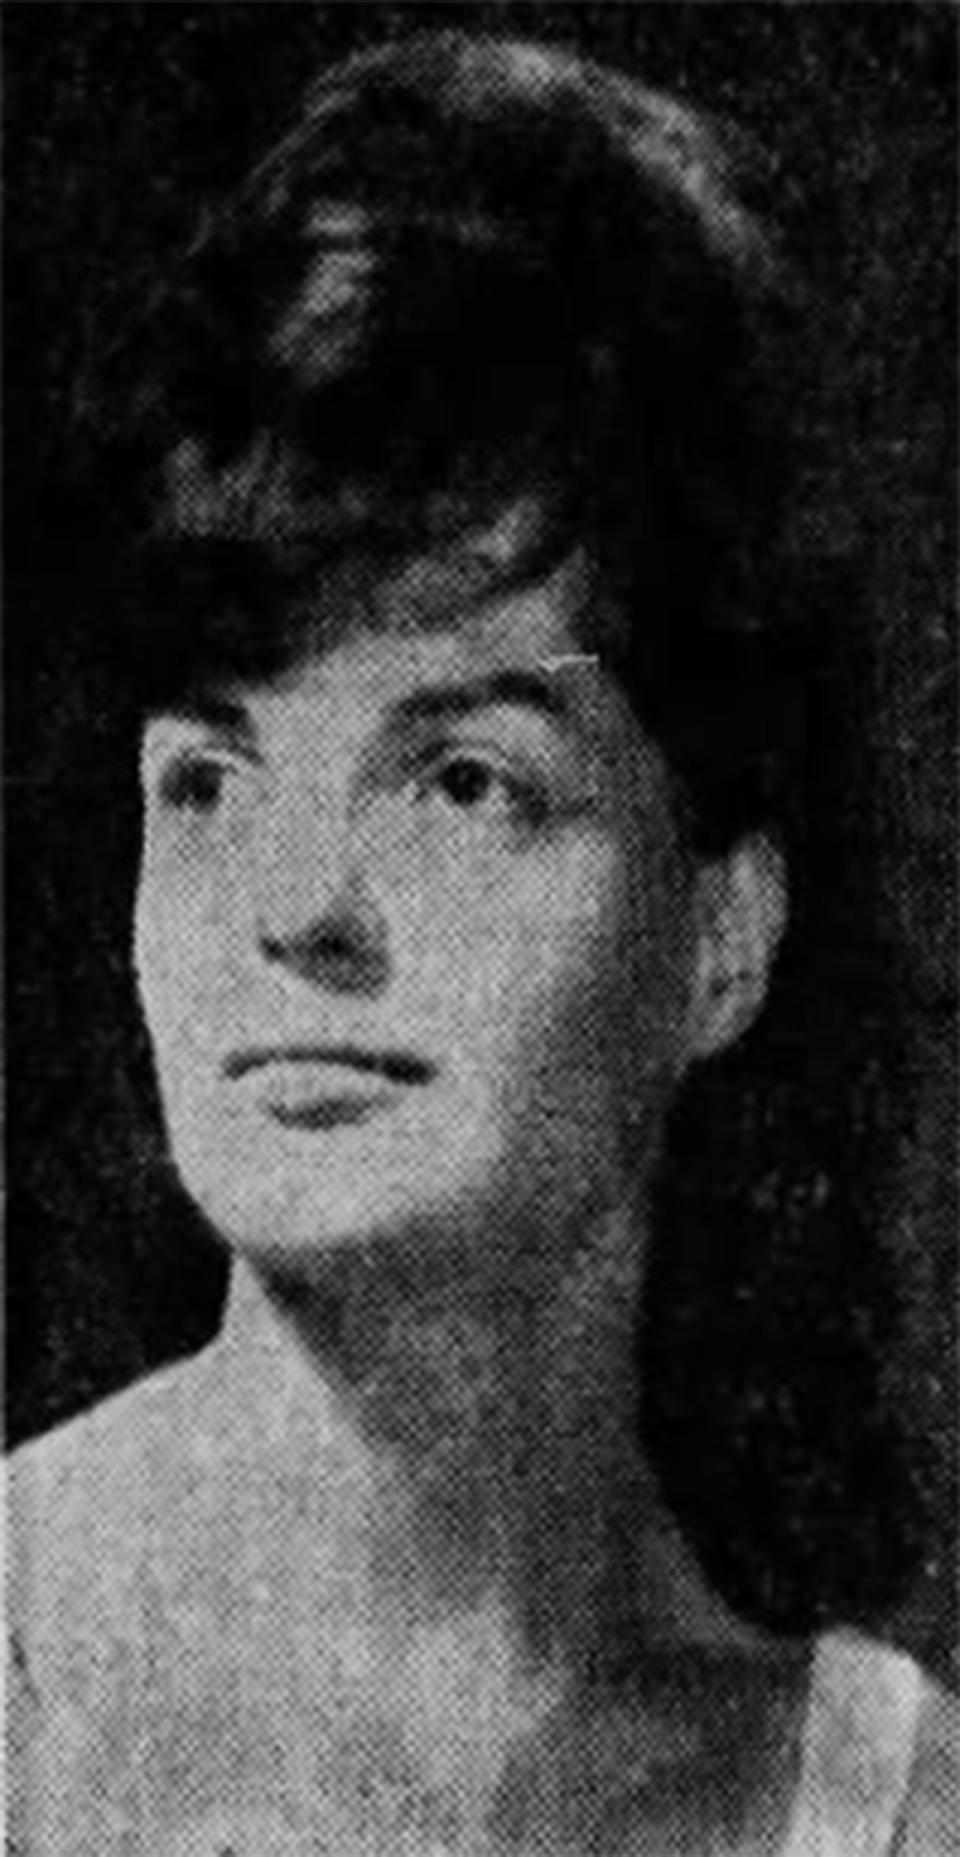 Barbara Lewis, daughter of Jean Price Lewis, in 1966.